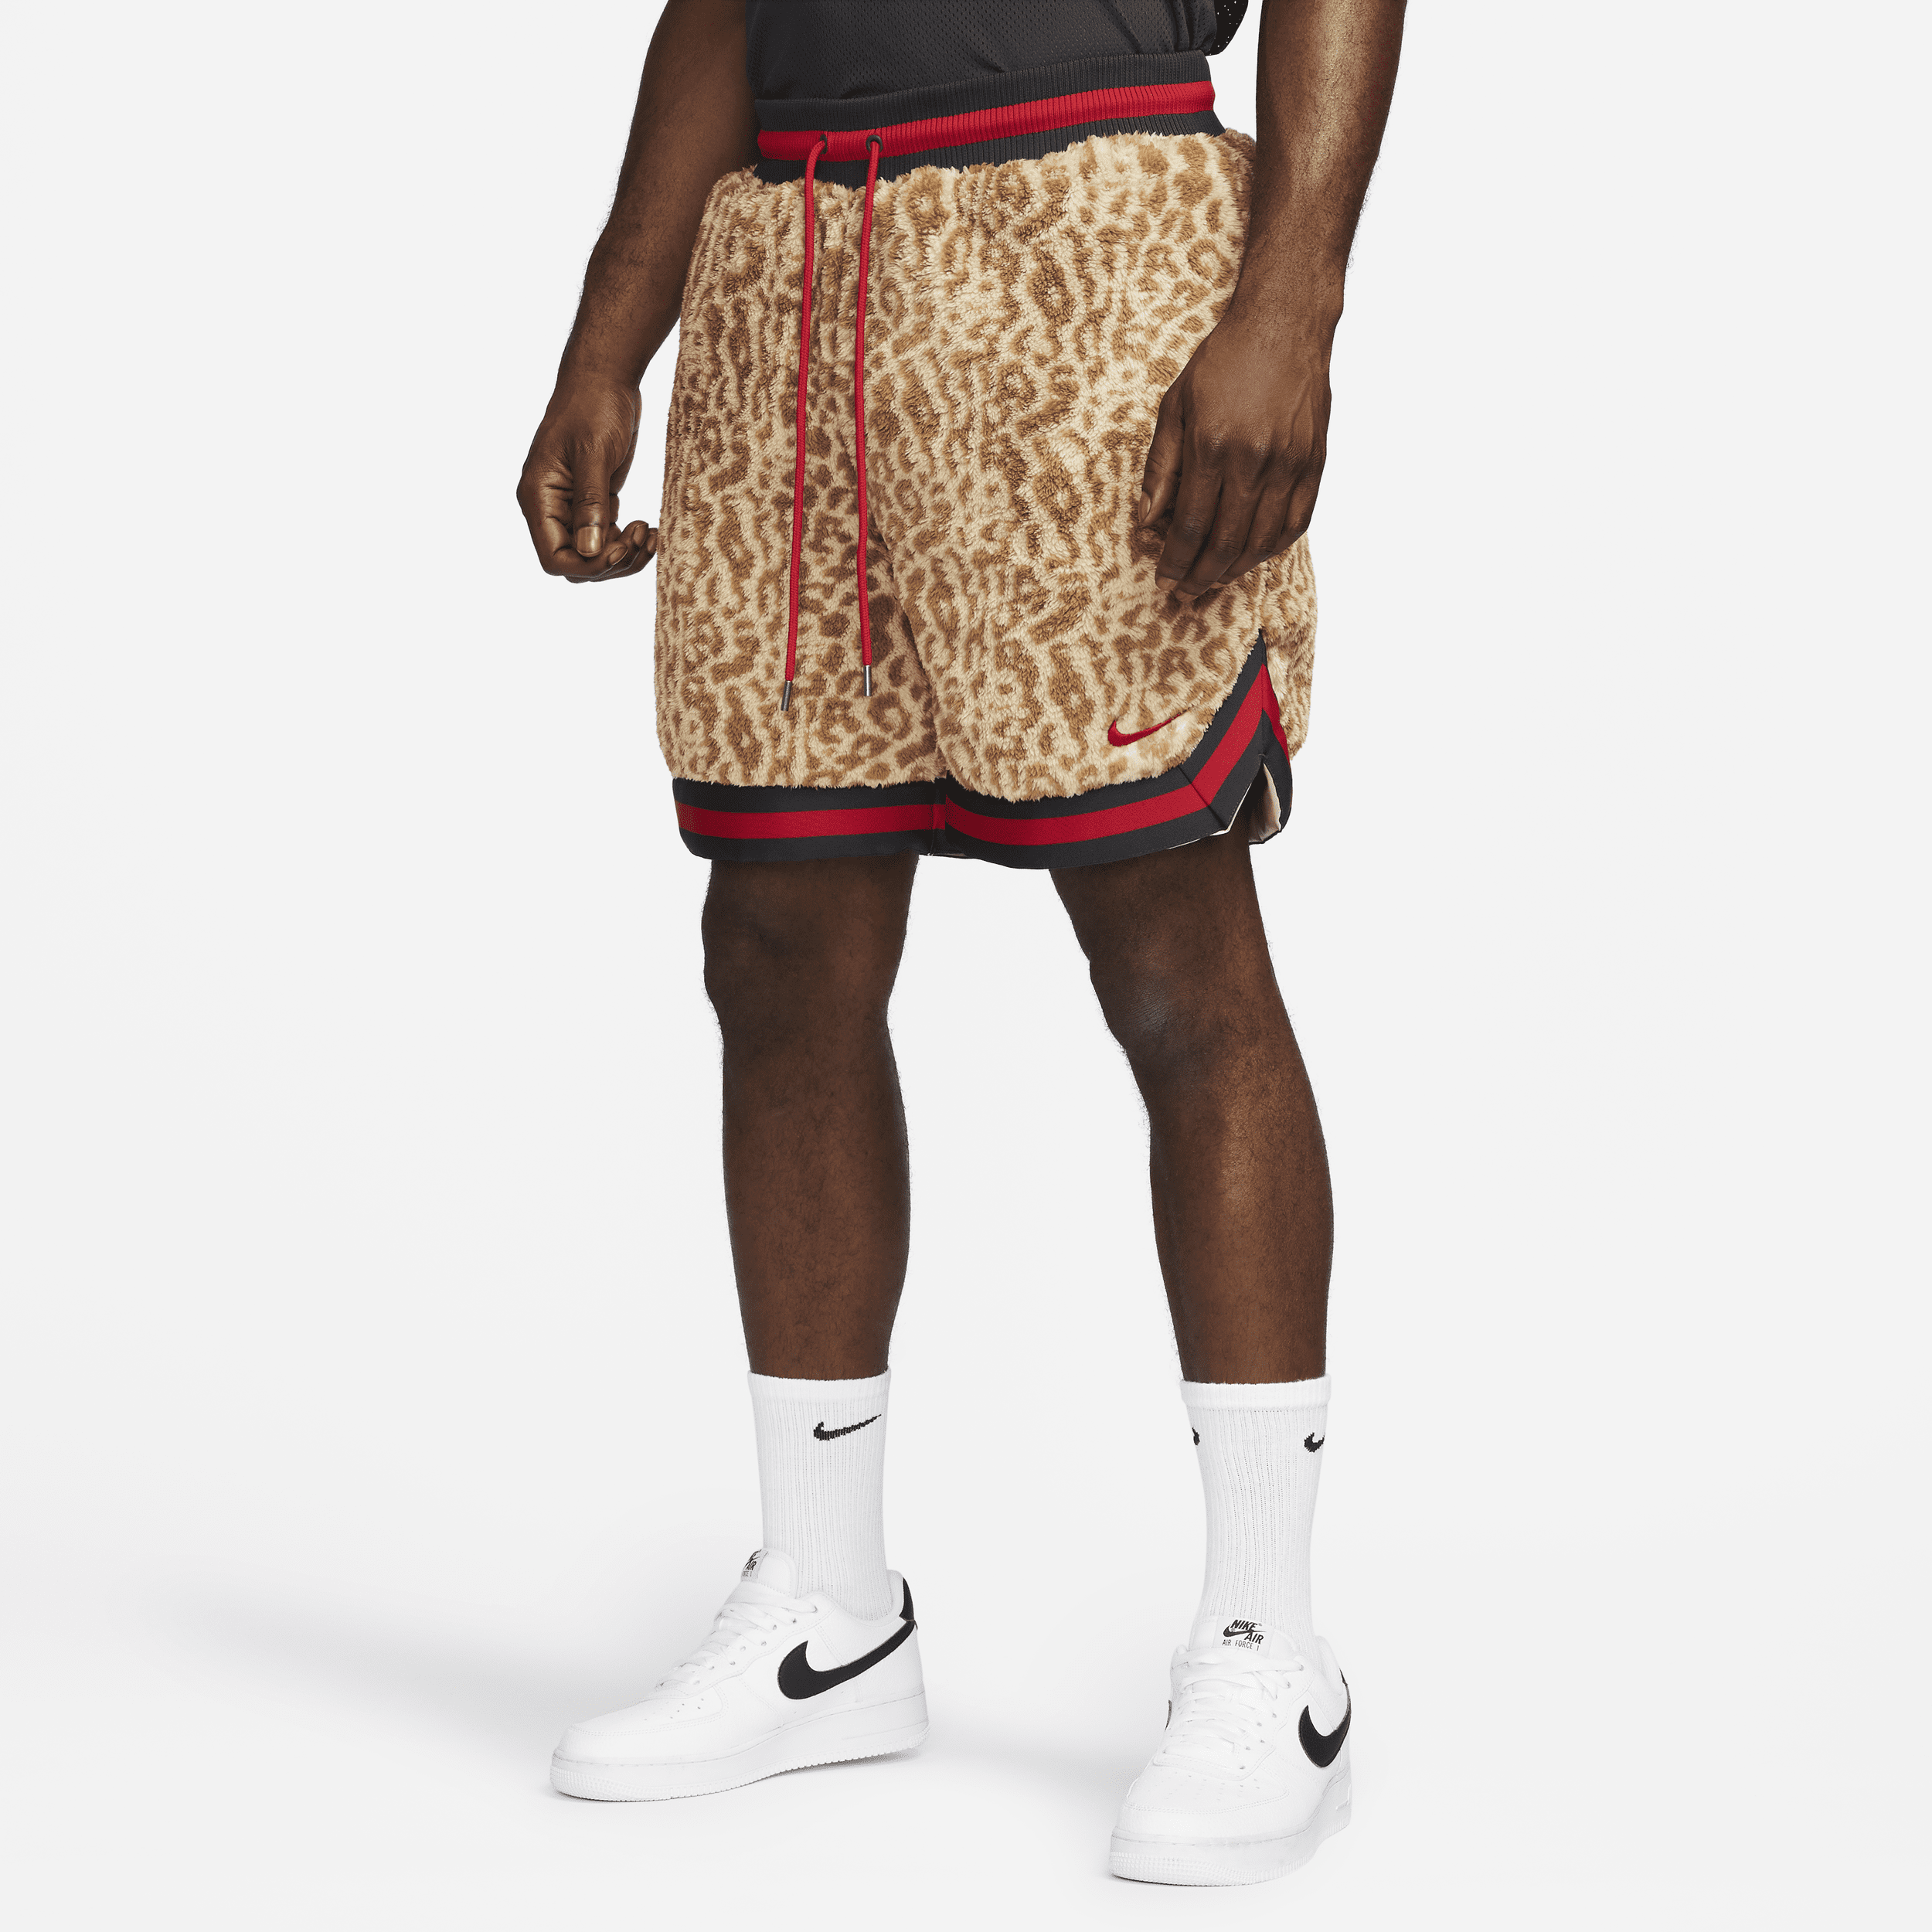 Premium Nike-basketballshorts (15 cm) til mænd - brun